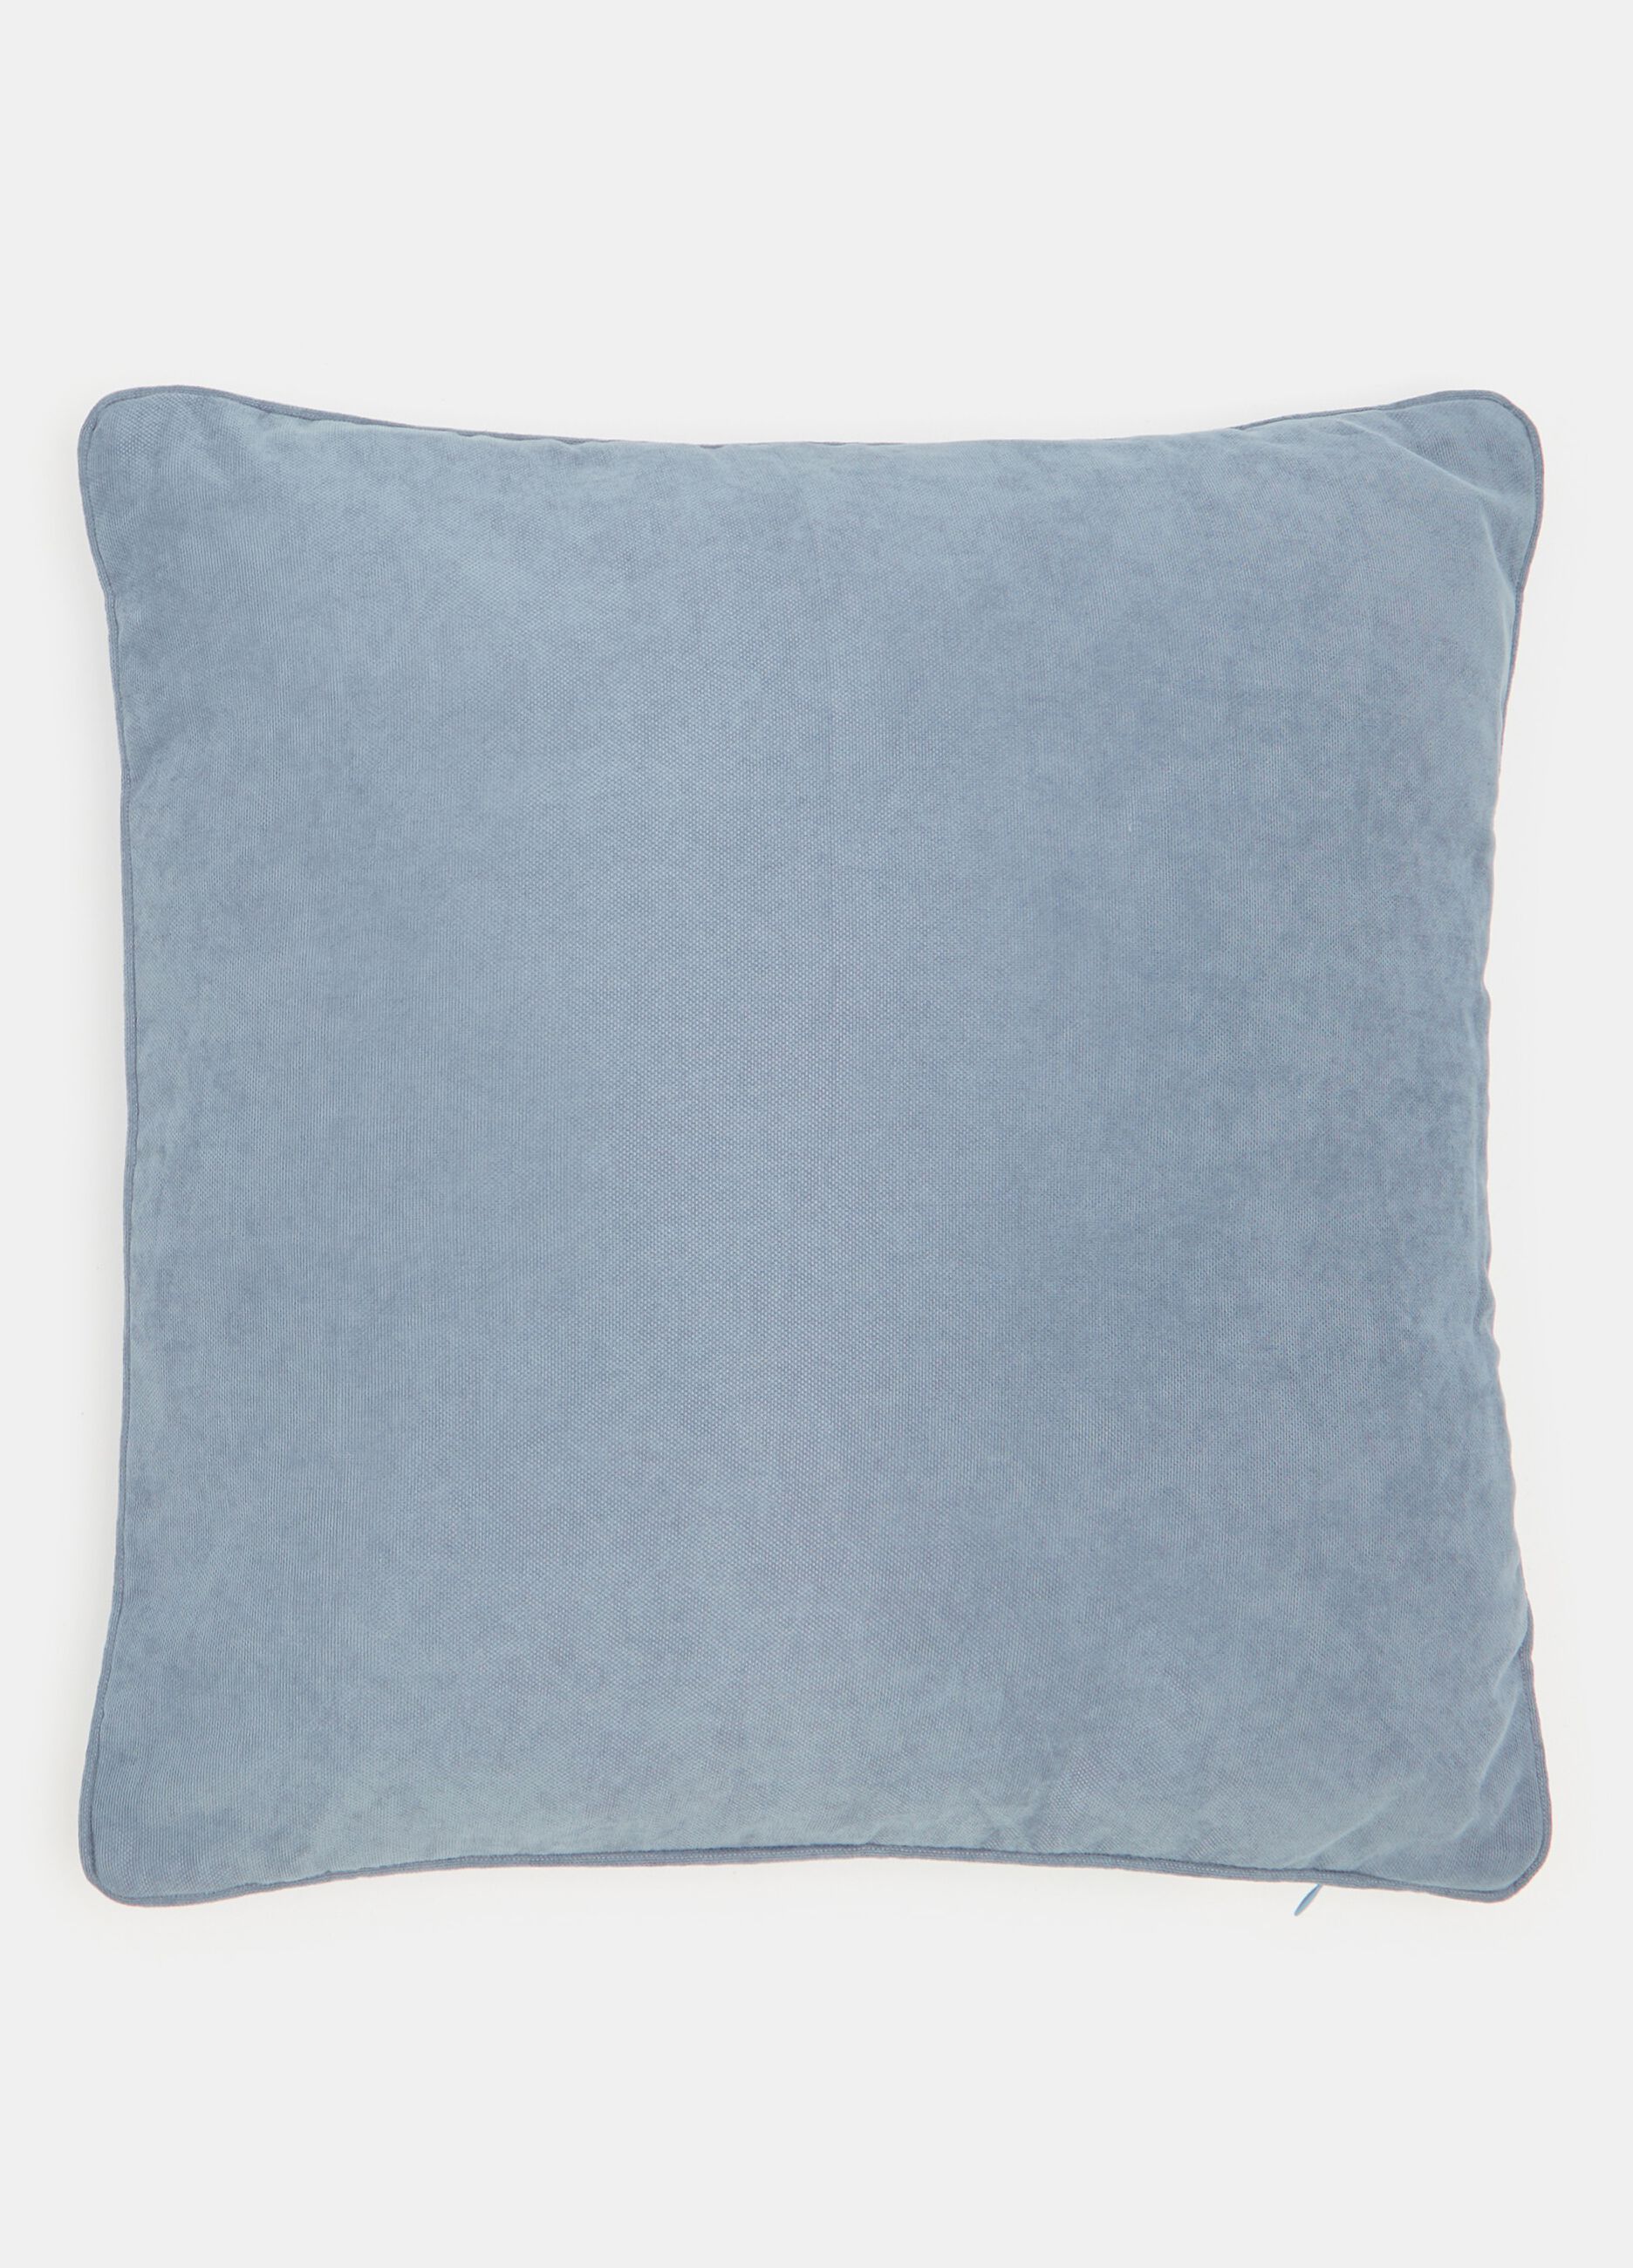 Solid colour square cushion